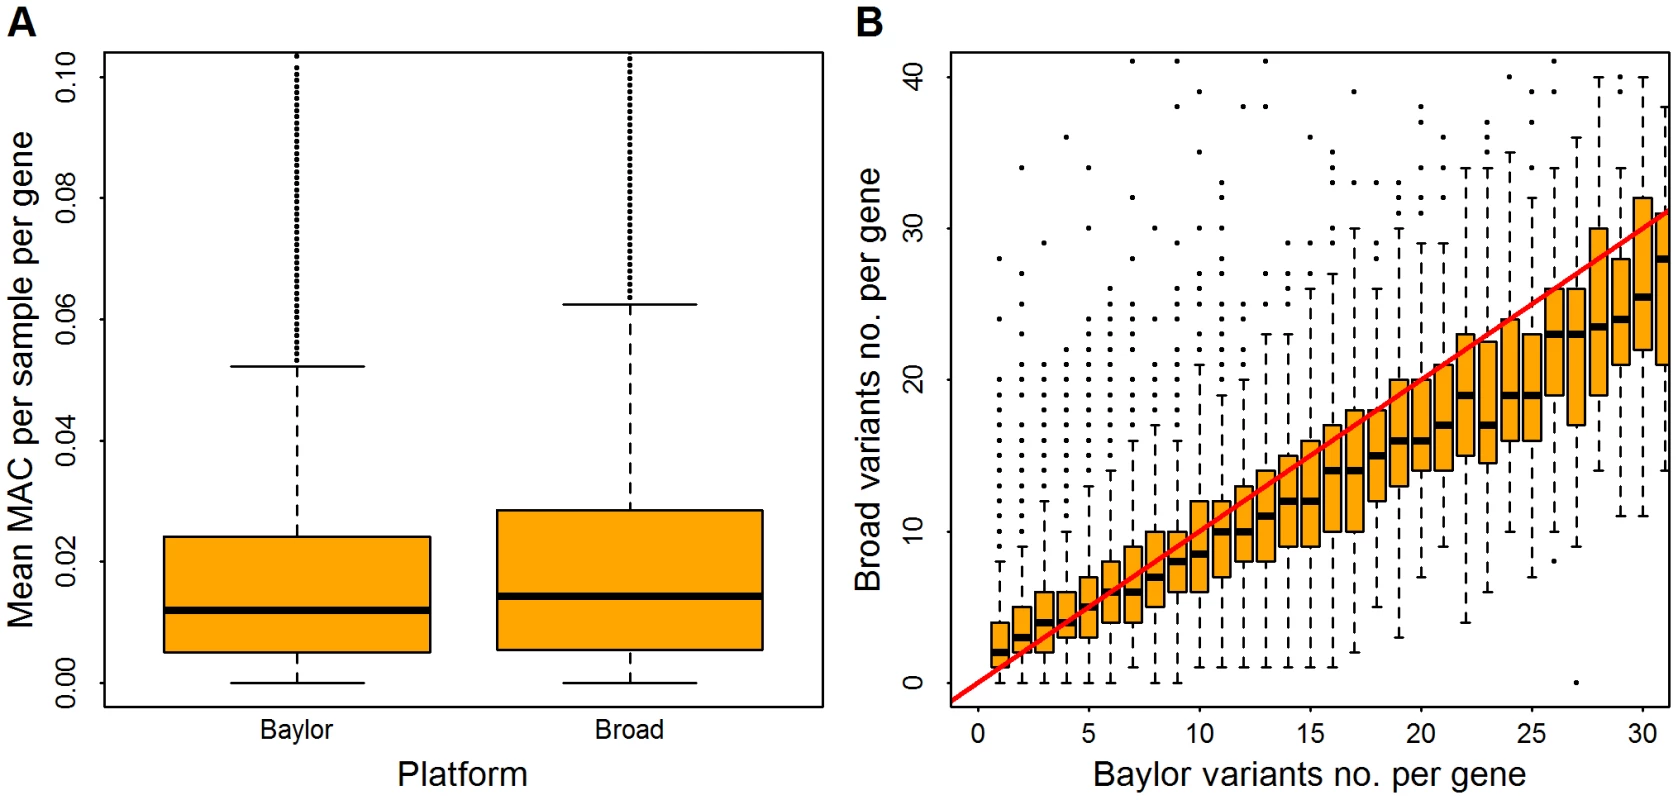 Distribution of rare variants per gene in Baylor and Broad data sets after filtering.